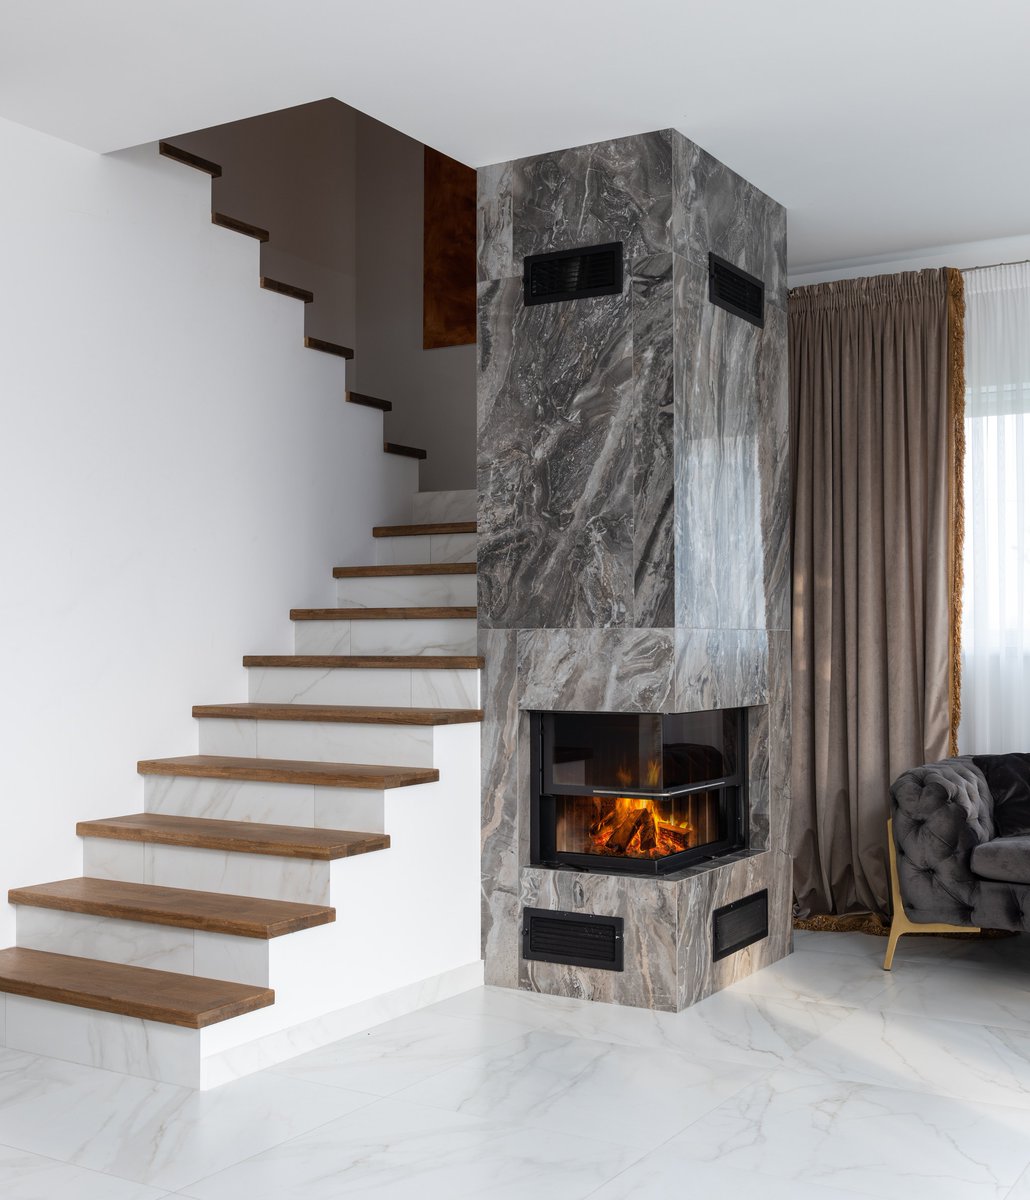 FIREPLACE GOALS 🔥 

#Inspiration #Fireplace #ModernFireplace #UseNaturalStone #Tiling #Stone #StoneFirePlace #ModernDesigns #Inspo #Architecture #InteriorDesign